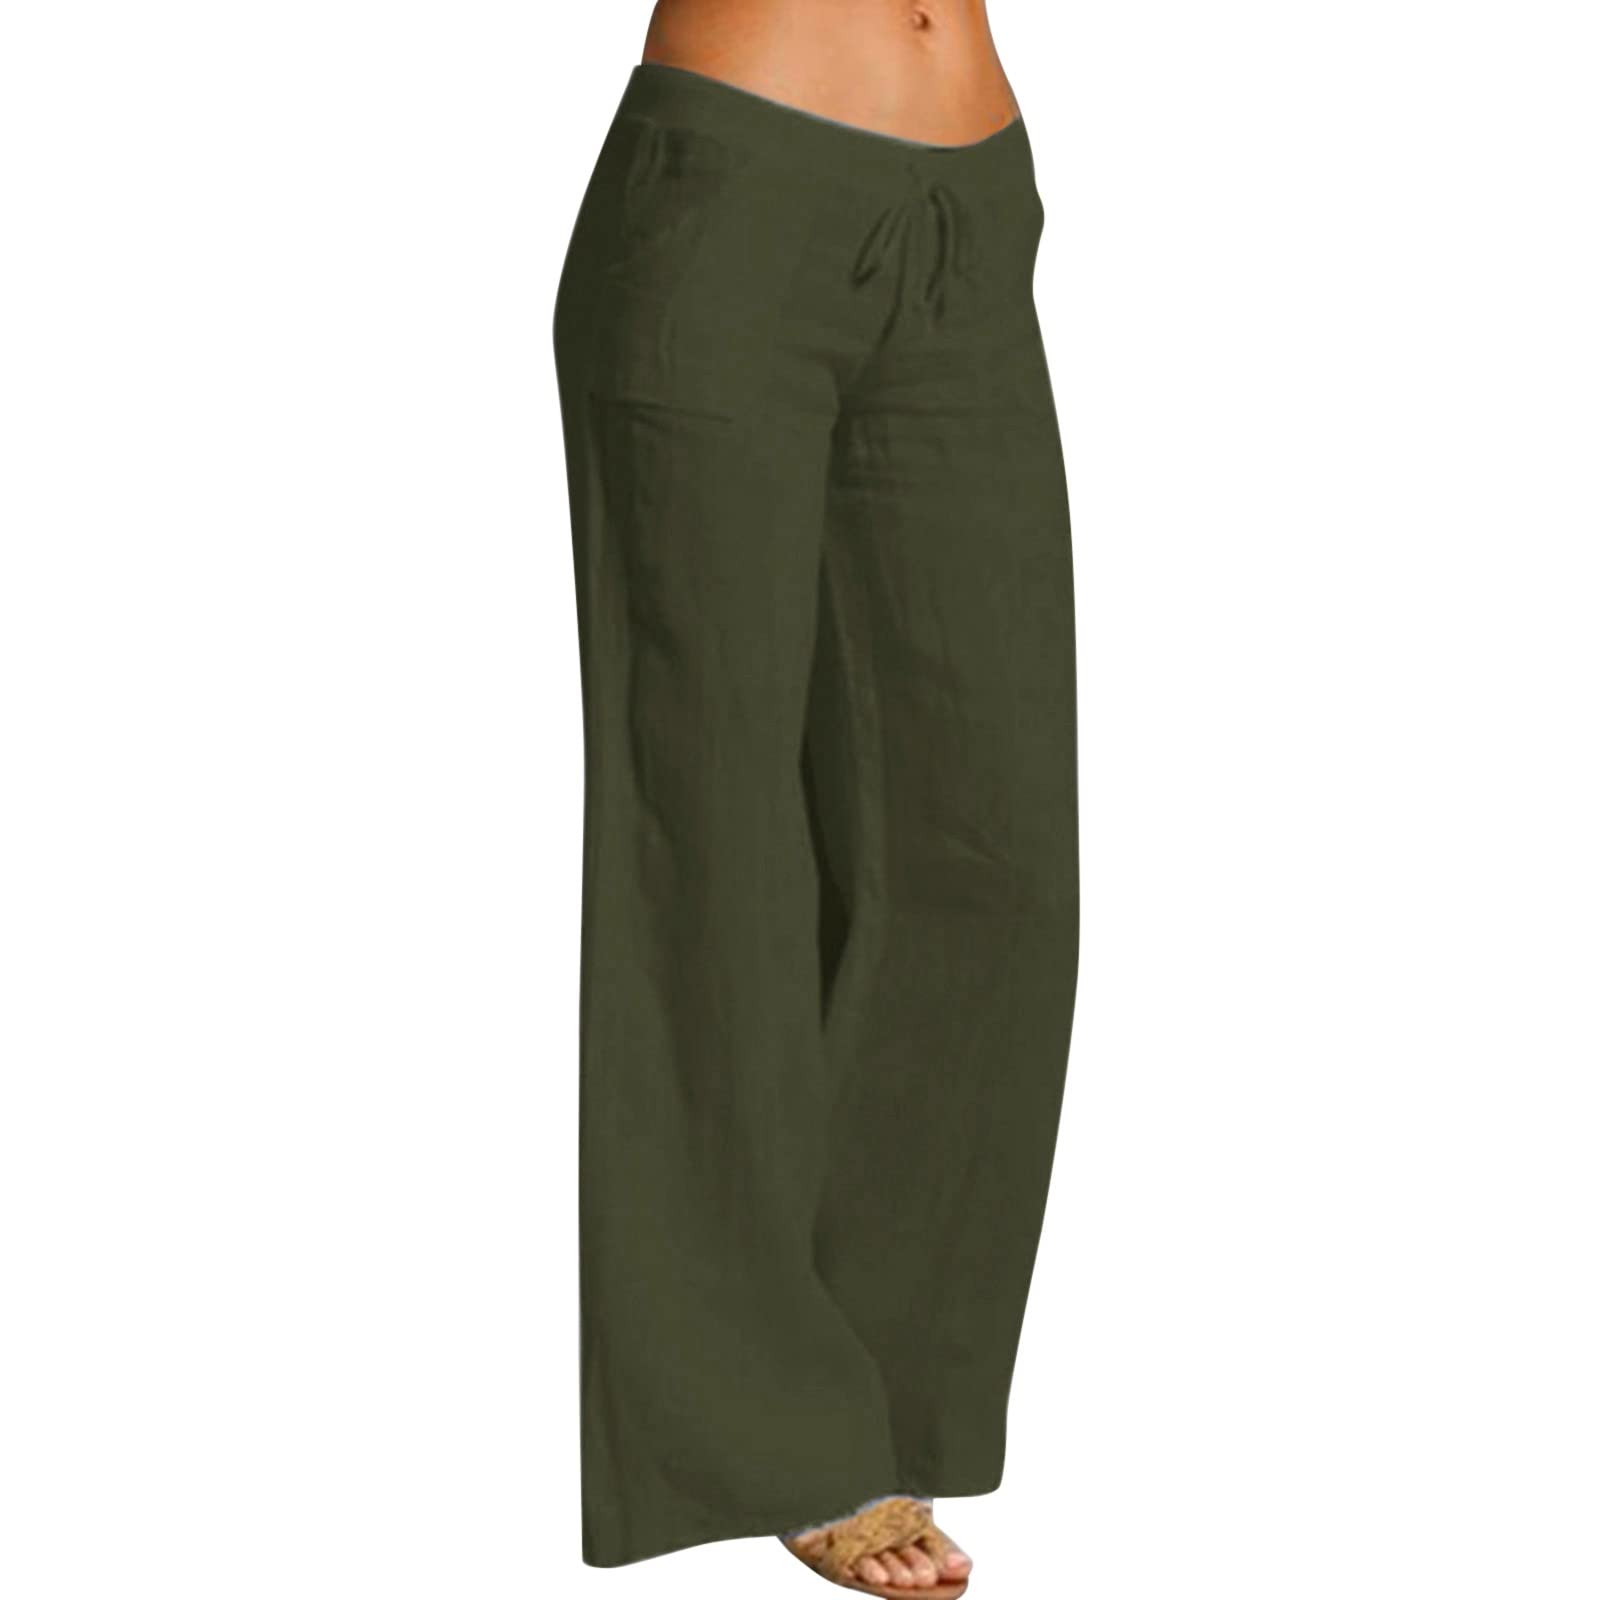 DAZLOR Linen Pants for Women Petite to Plus Size High Waist Drawstring  Beach Pants Loose Fit